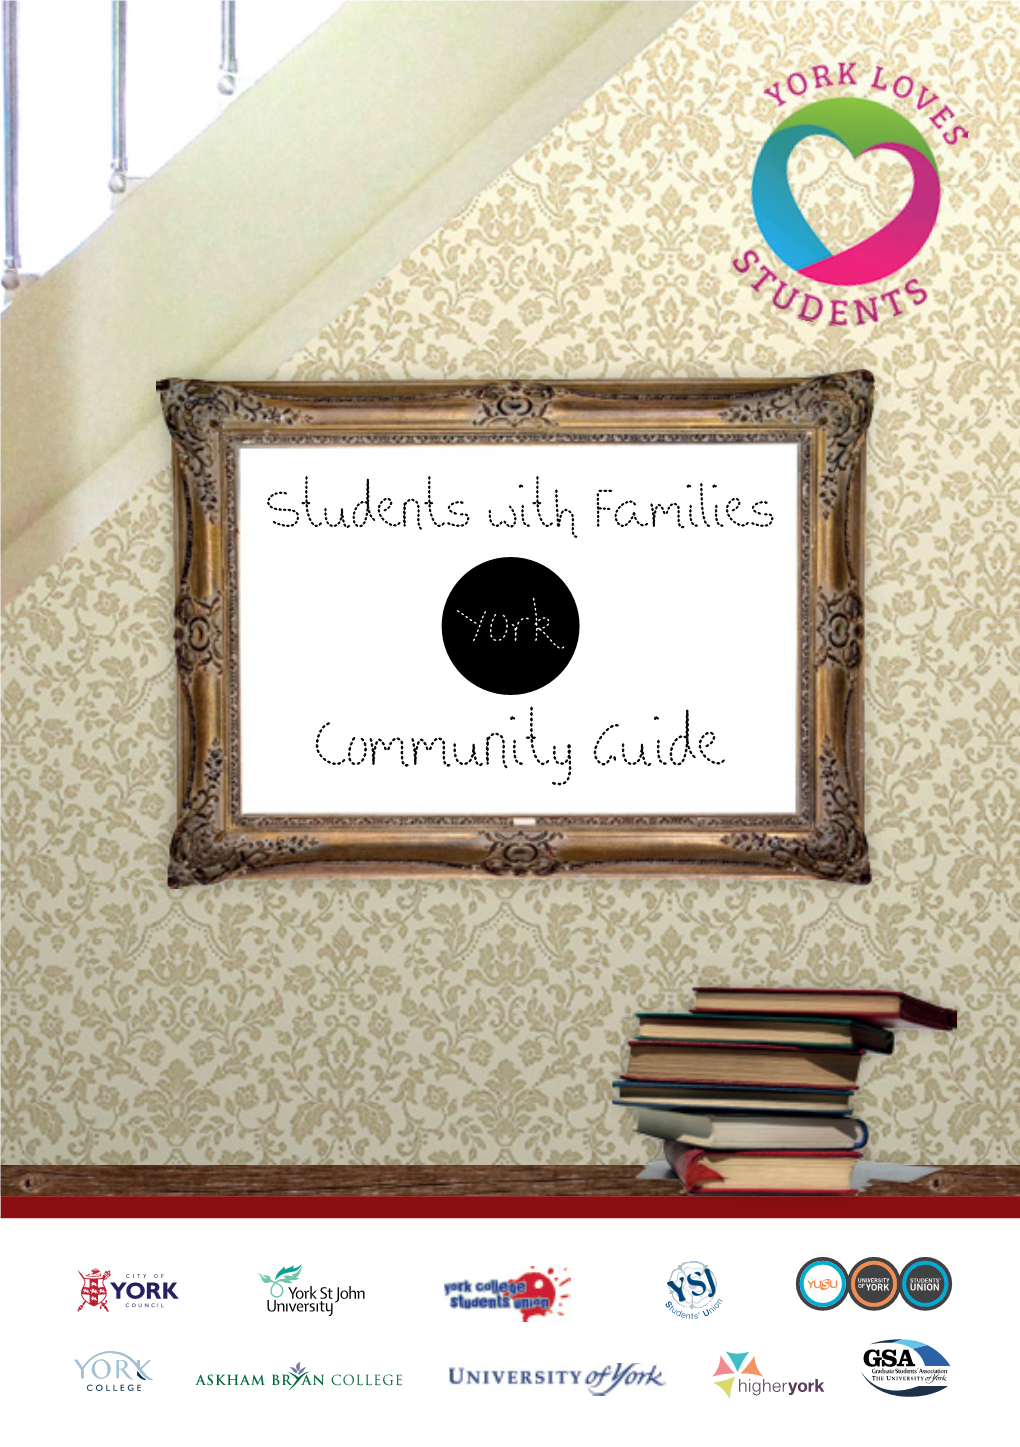 York Community Guide